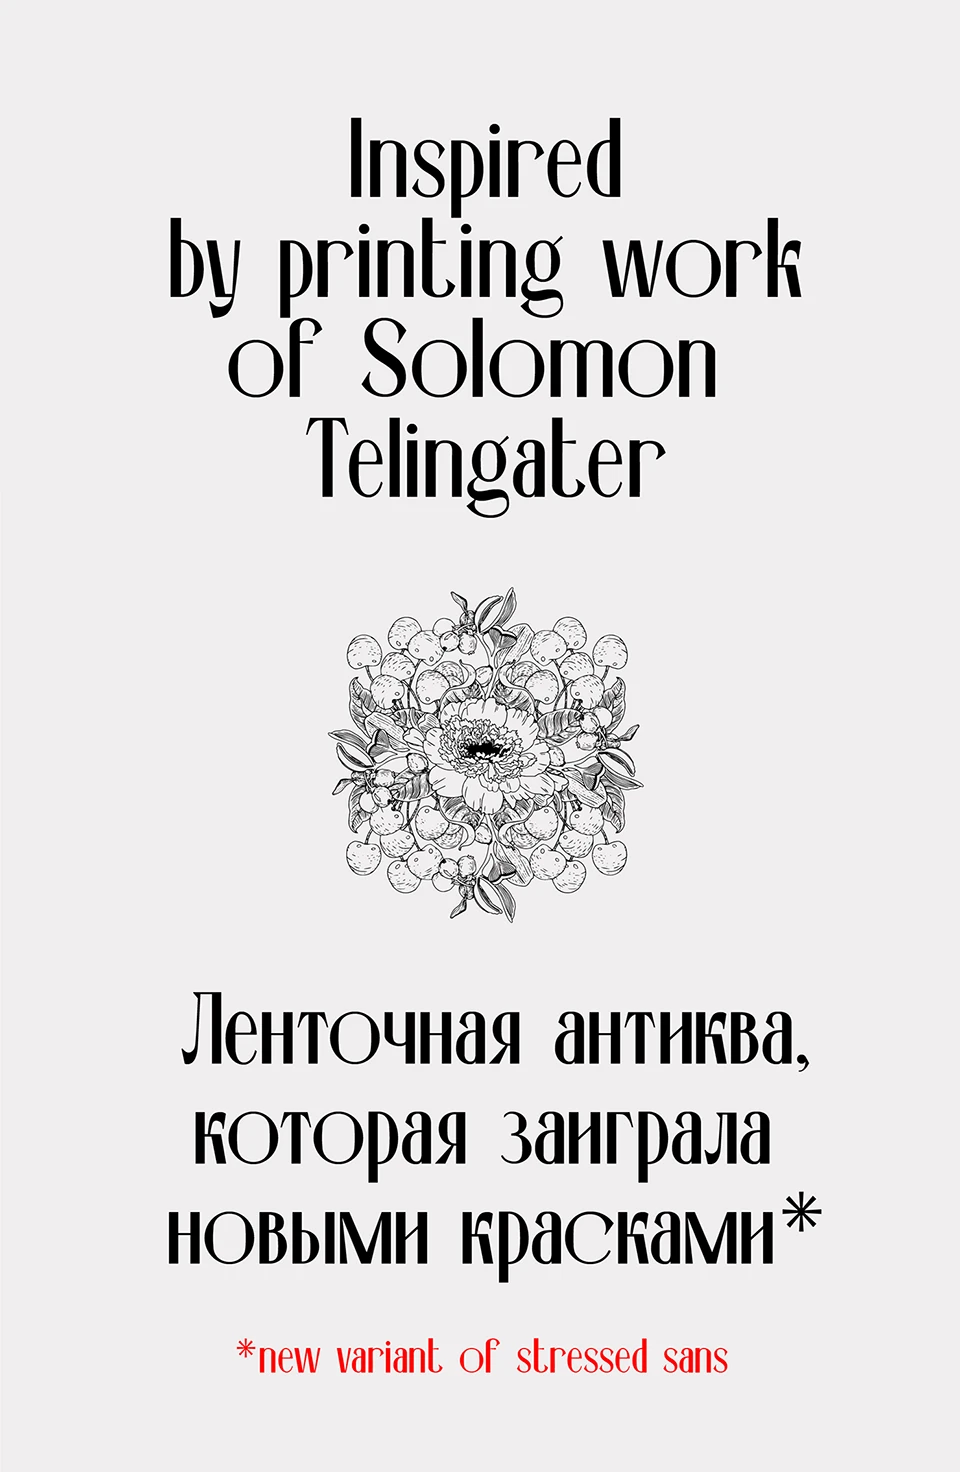 belarus typeface